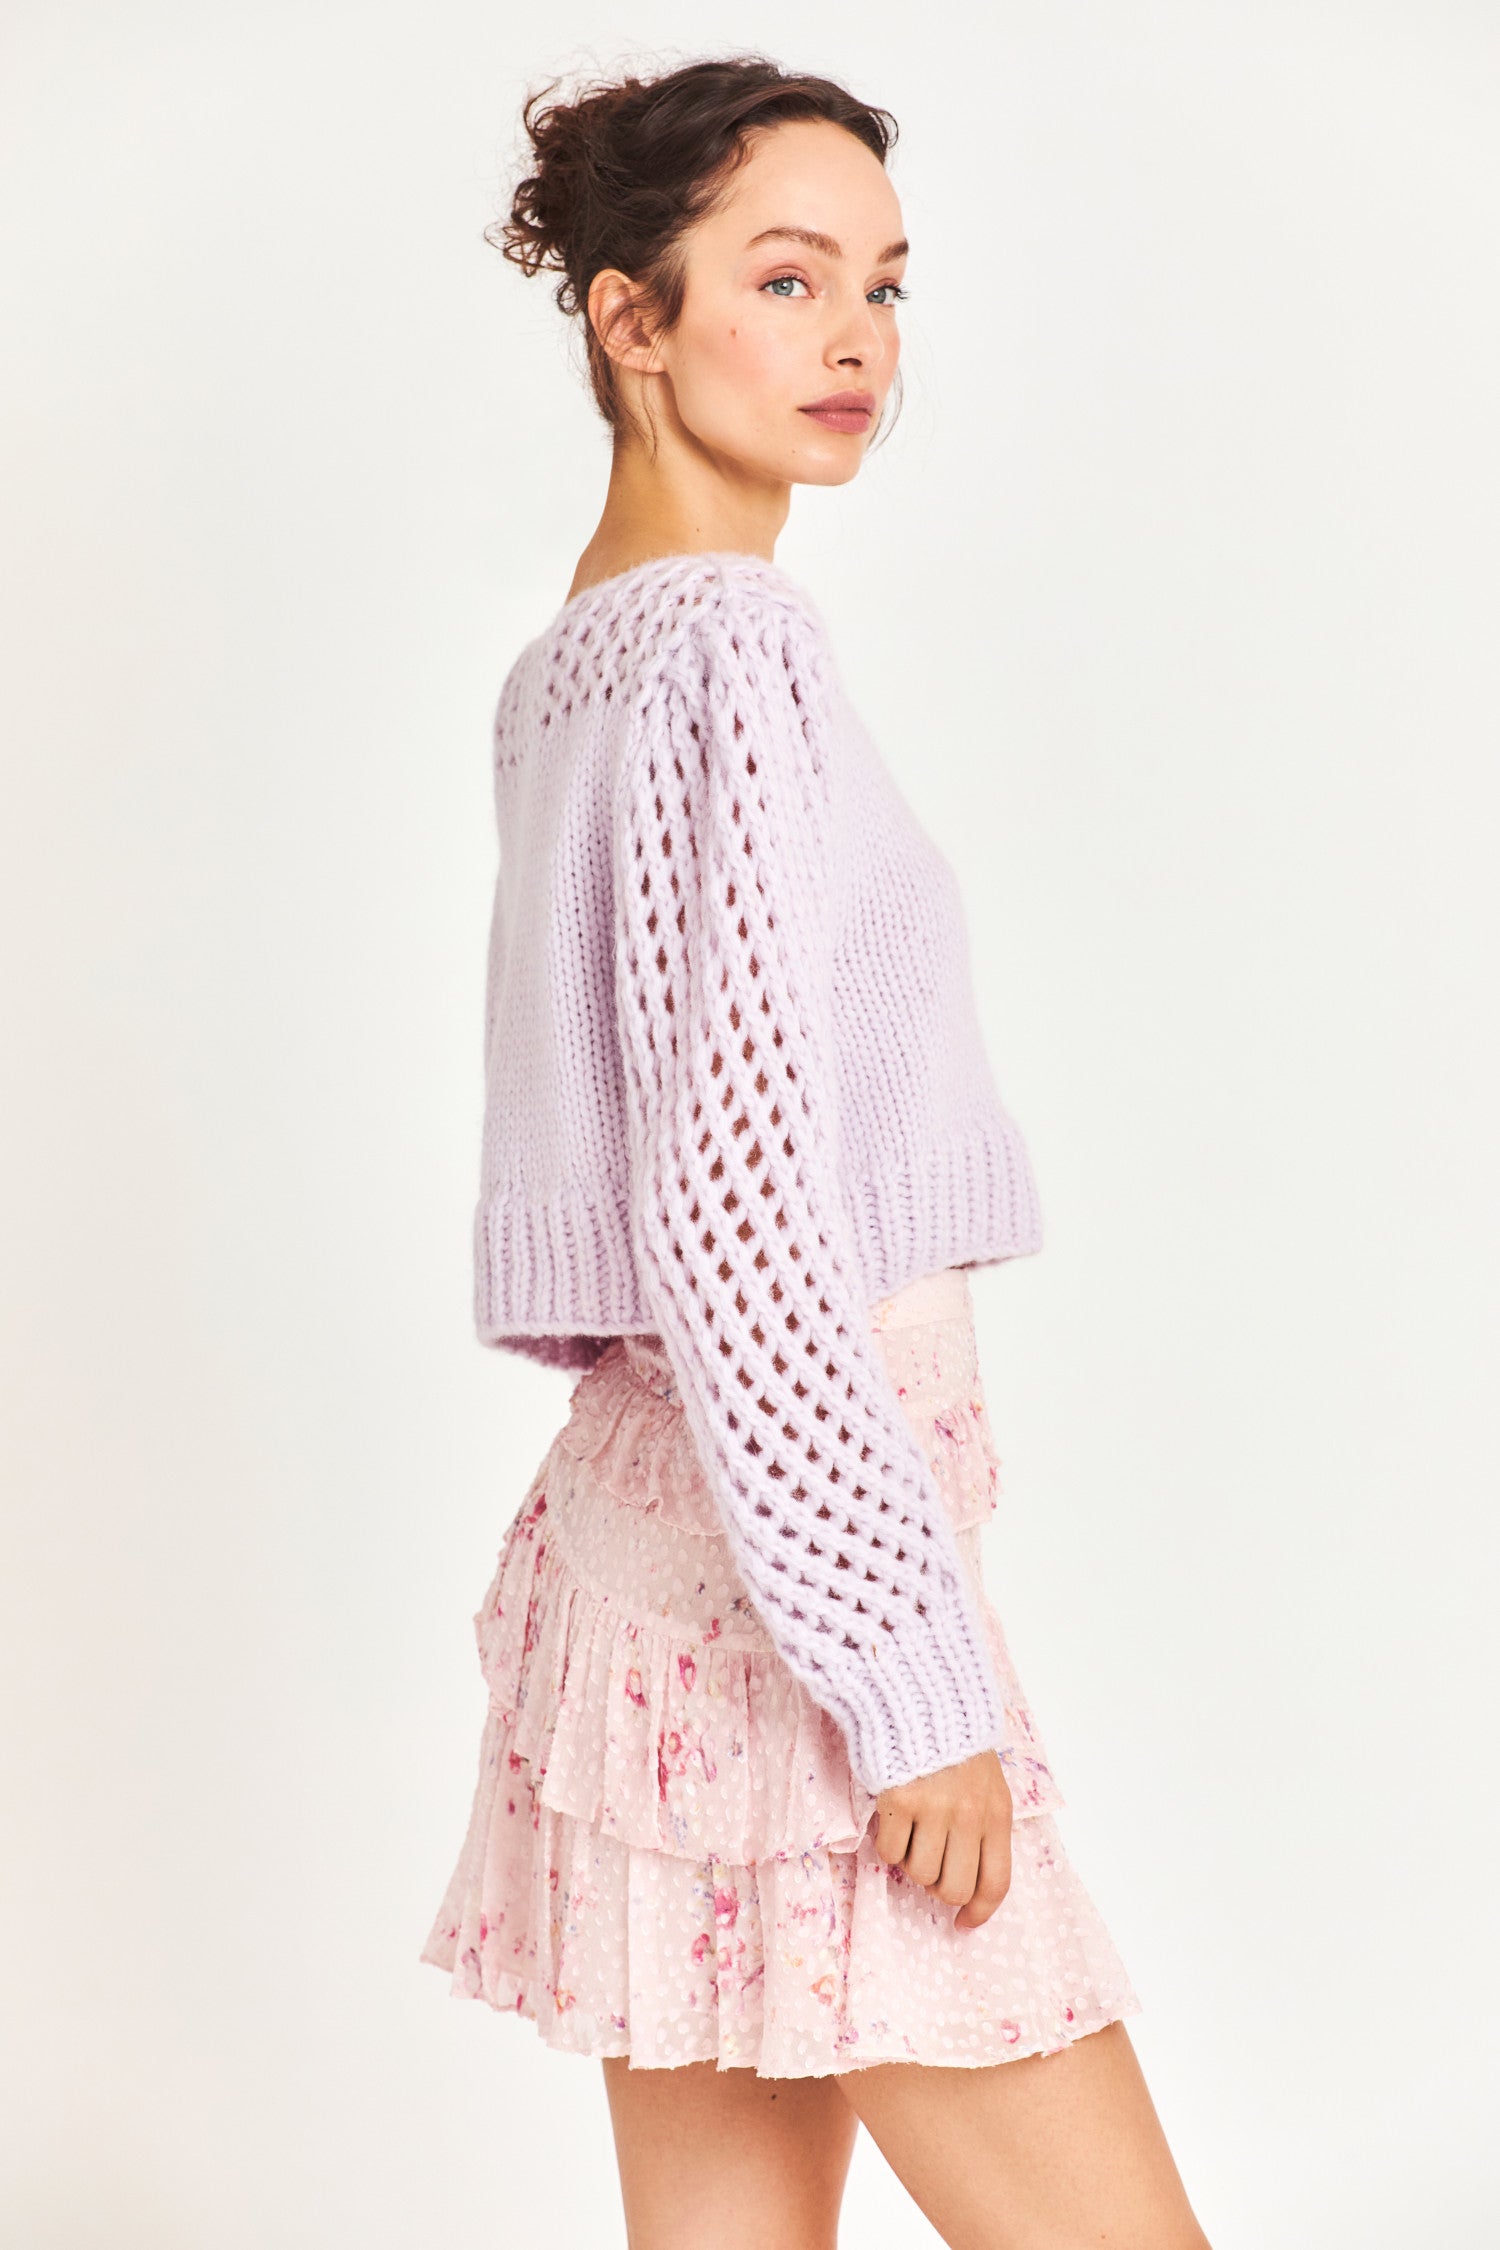 Side image of model wearing pink mini skirt